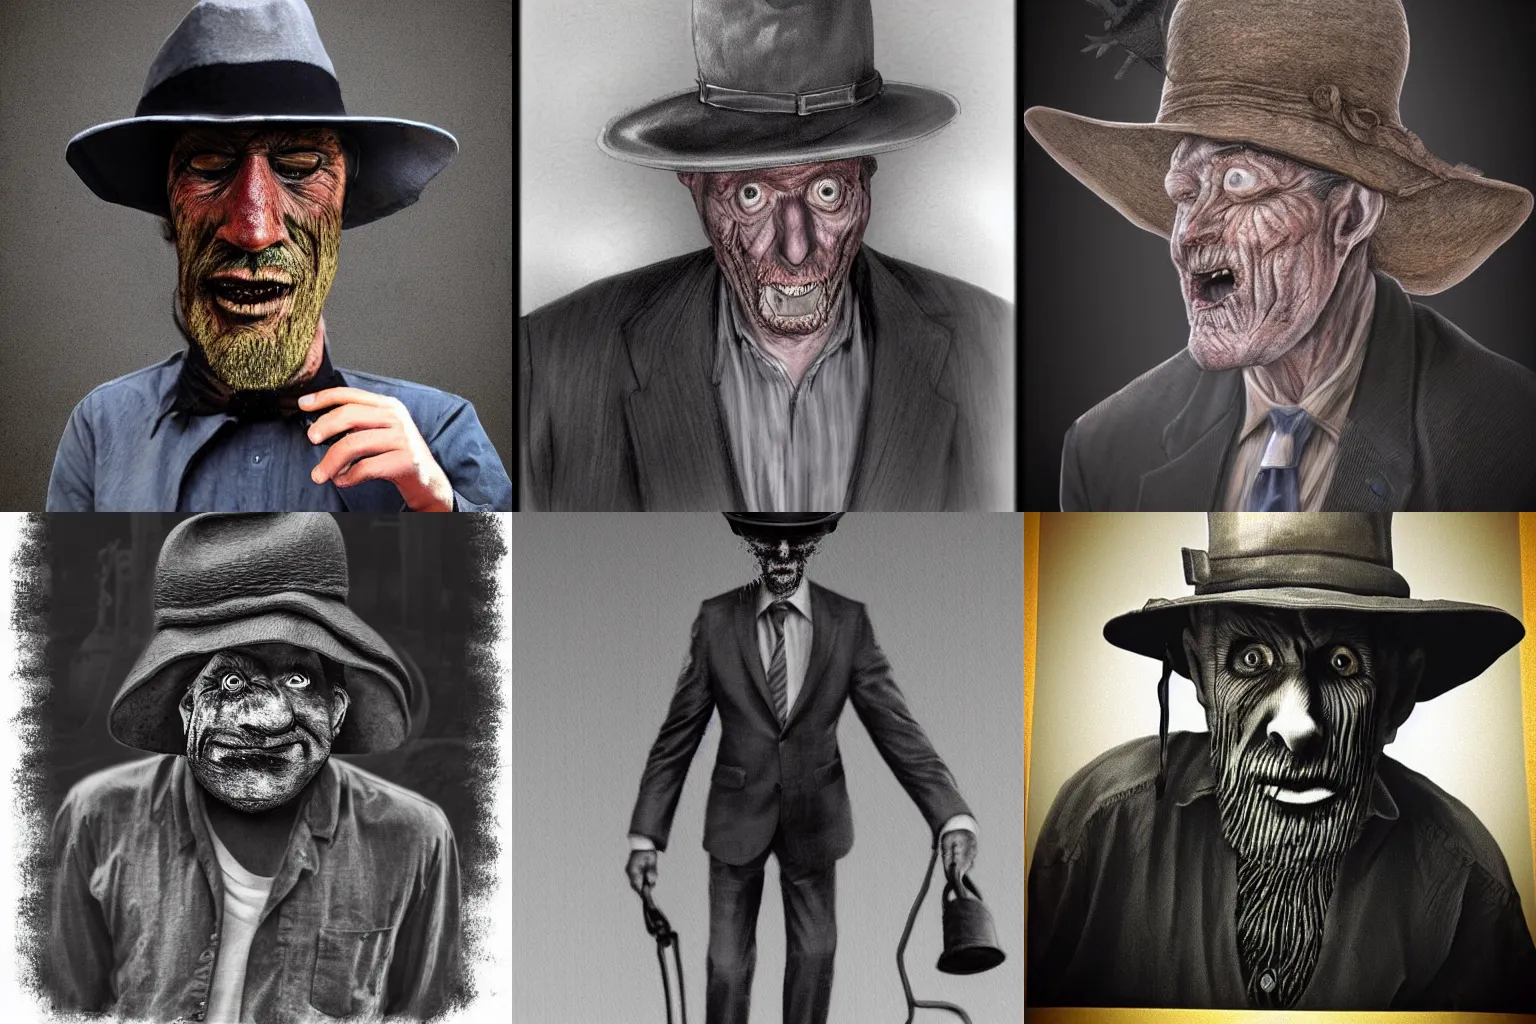 Prompt: the hat man hyper realistic, creepy, dark,